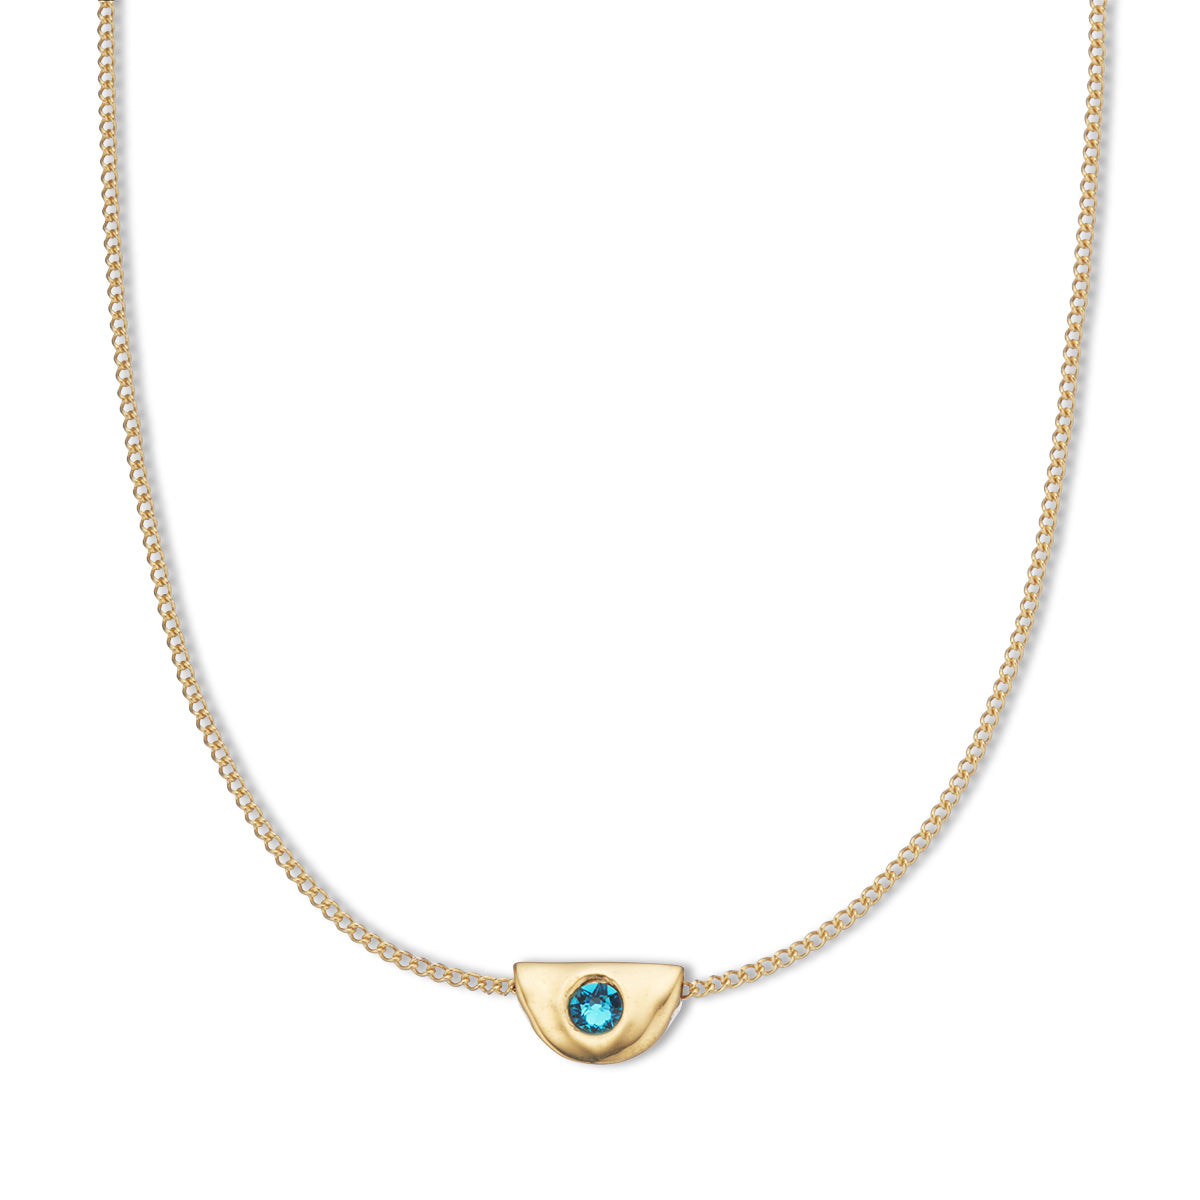 December blue topaz birthstone necklace 18k gold plated